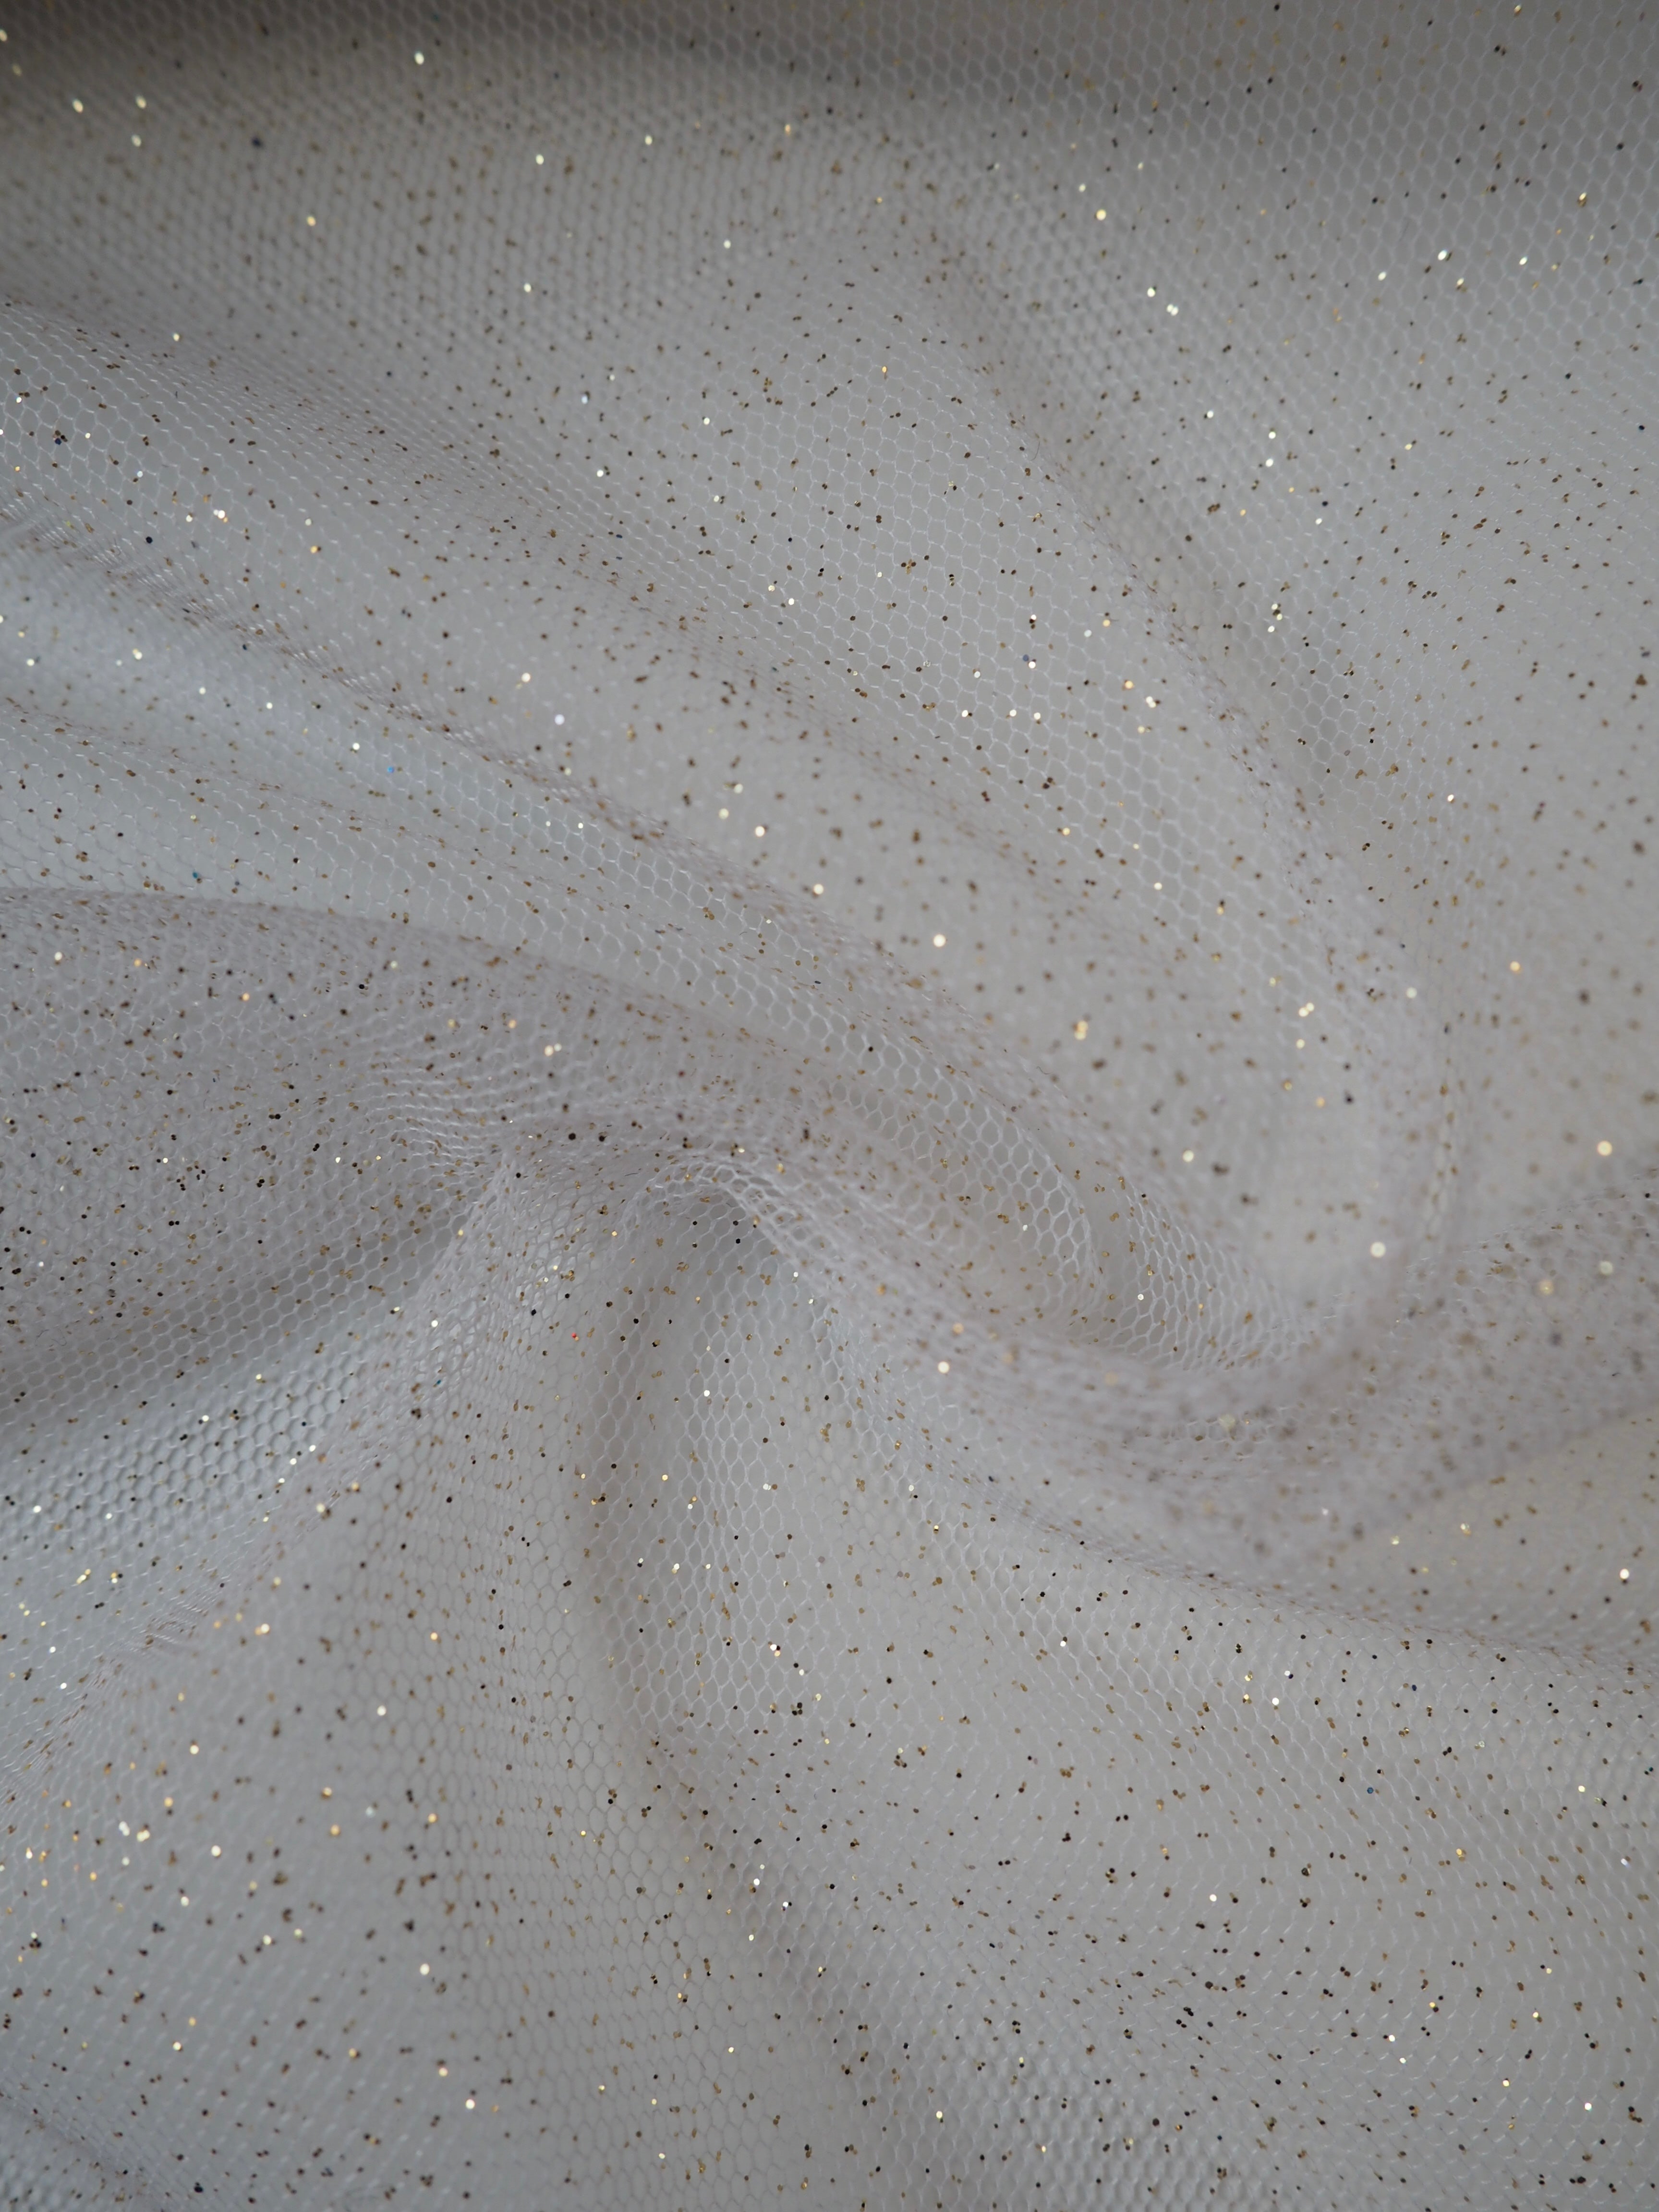 White Tulle Shimmer Fabric